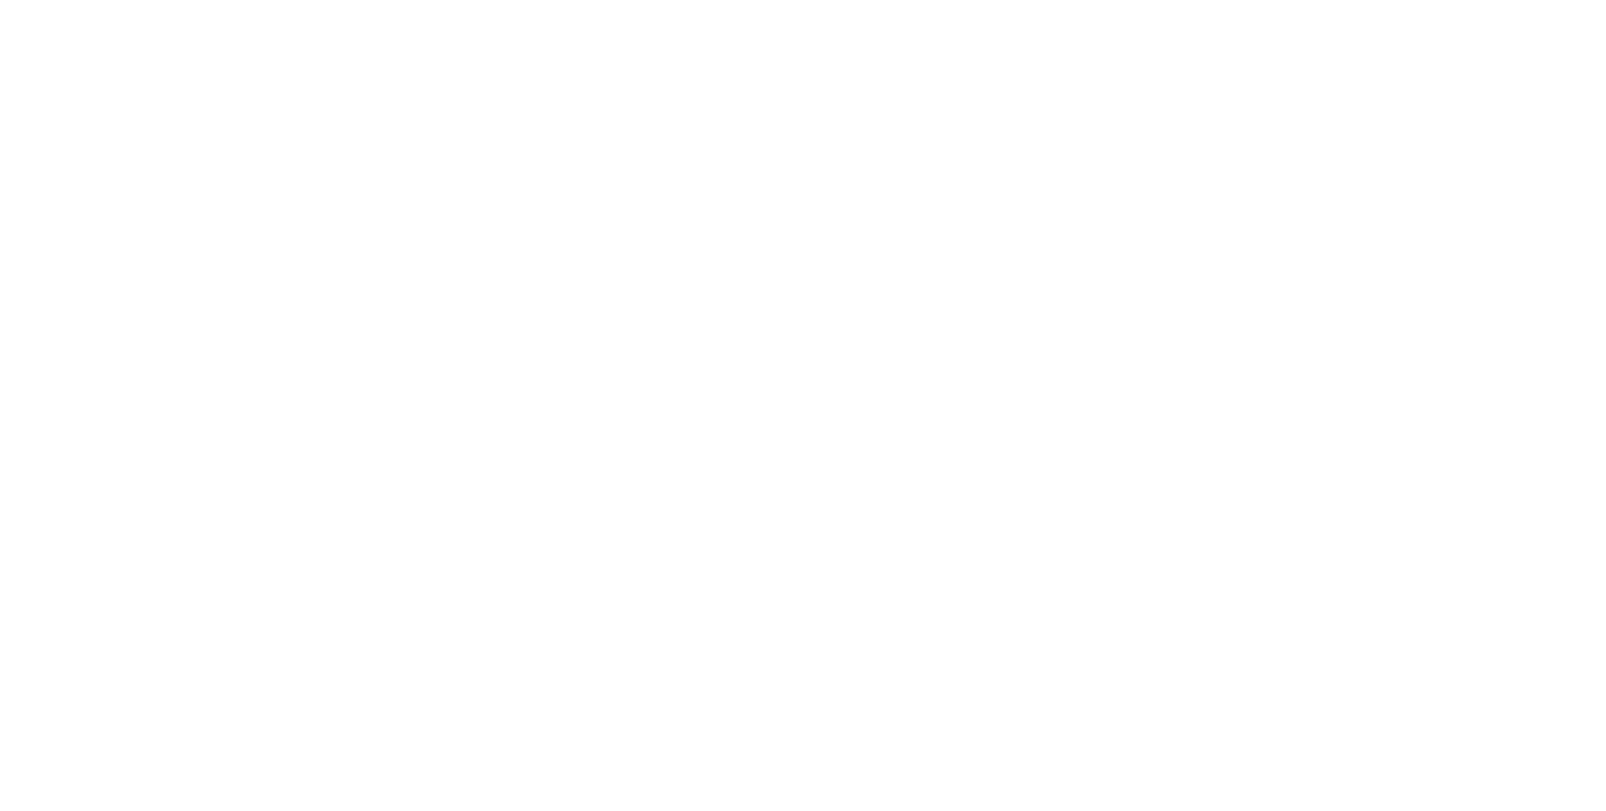 Realtor and equal housing logos